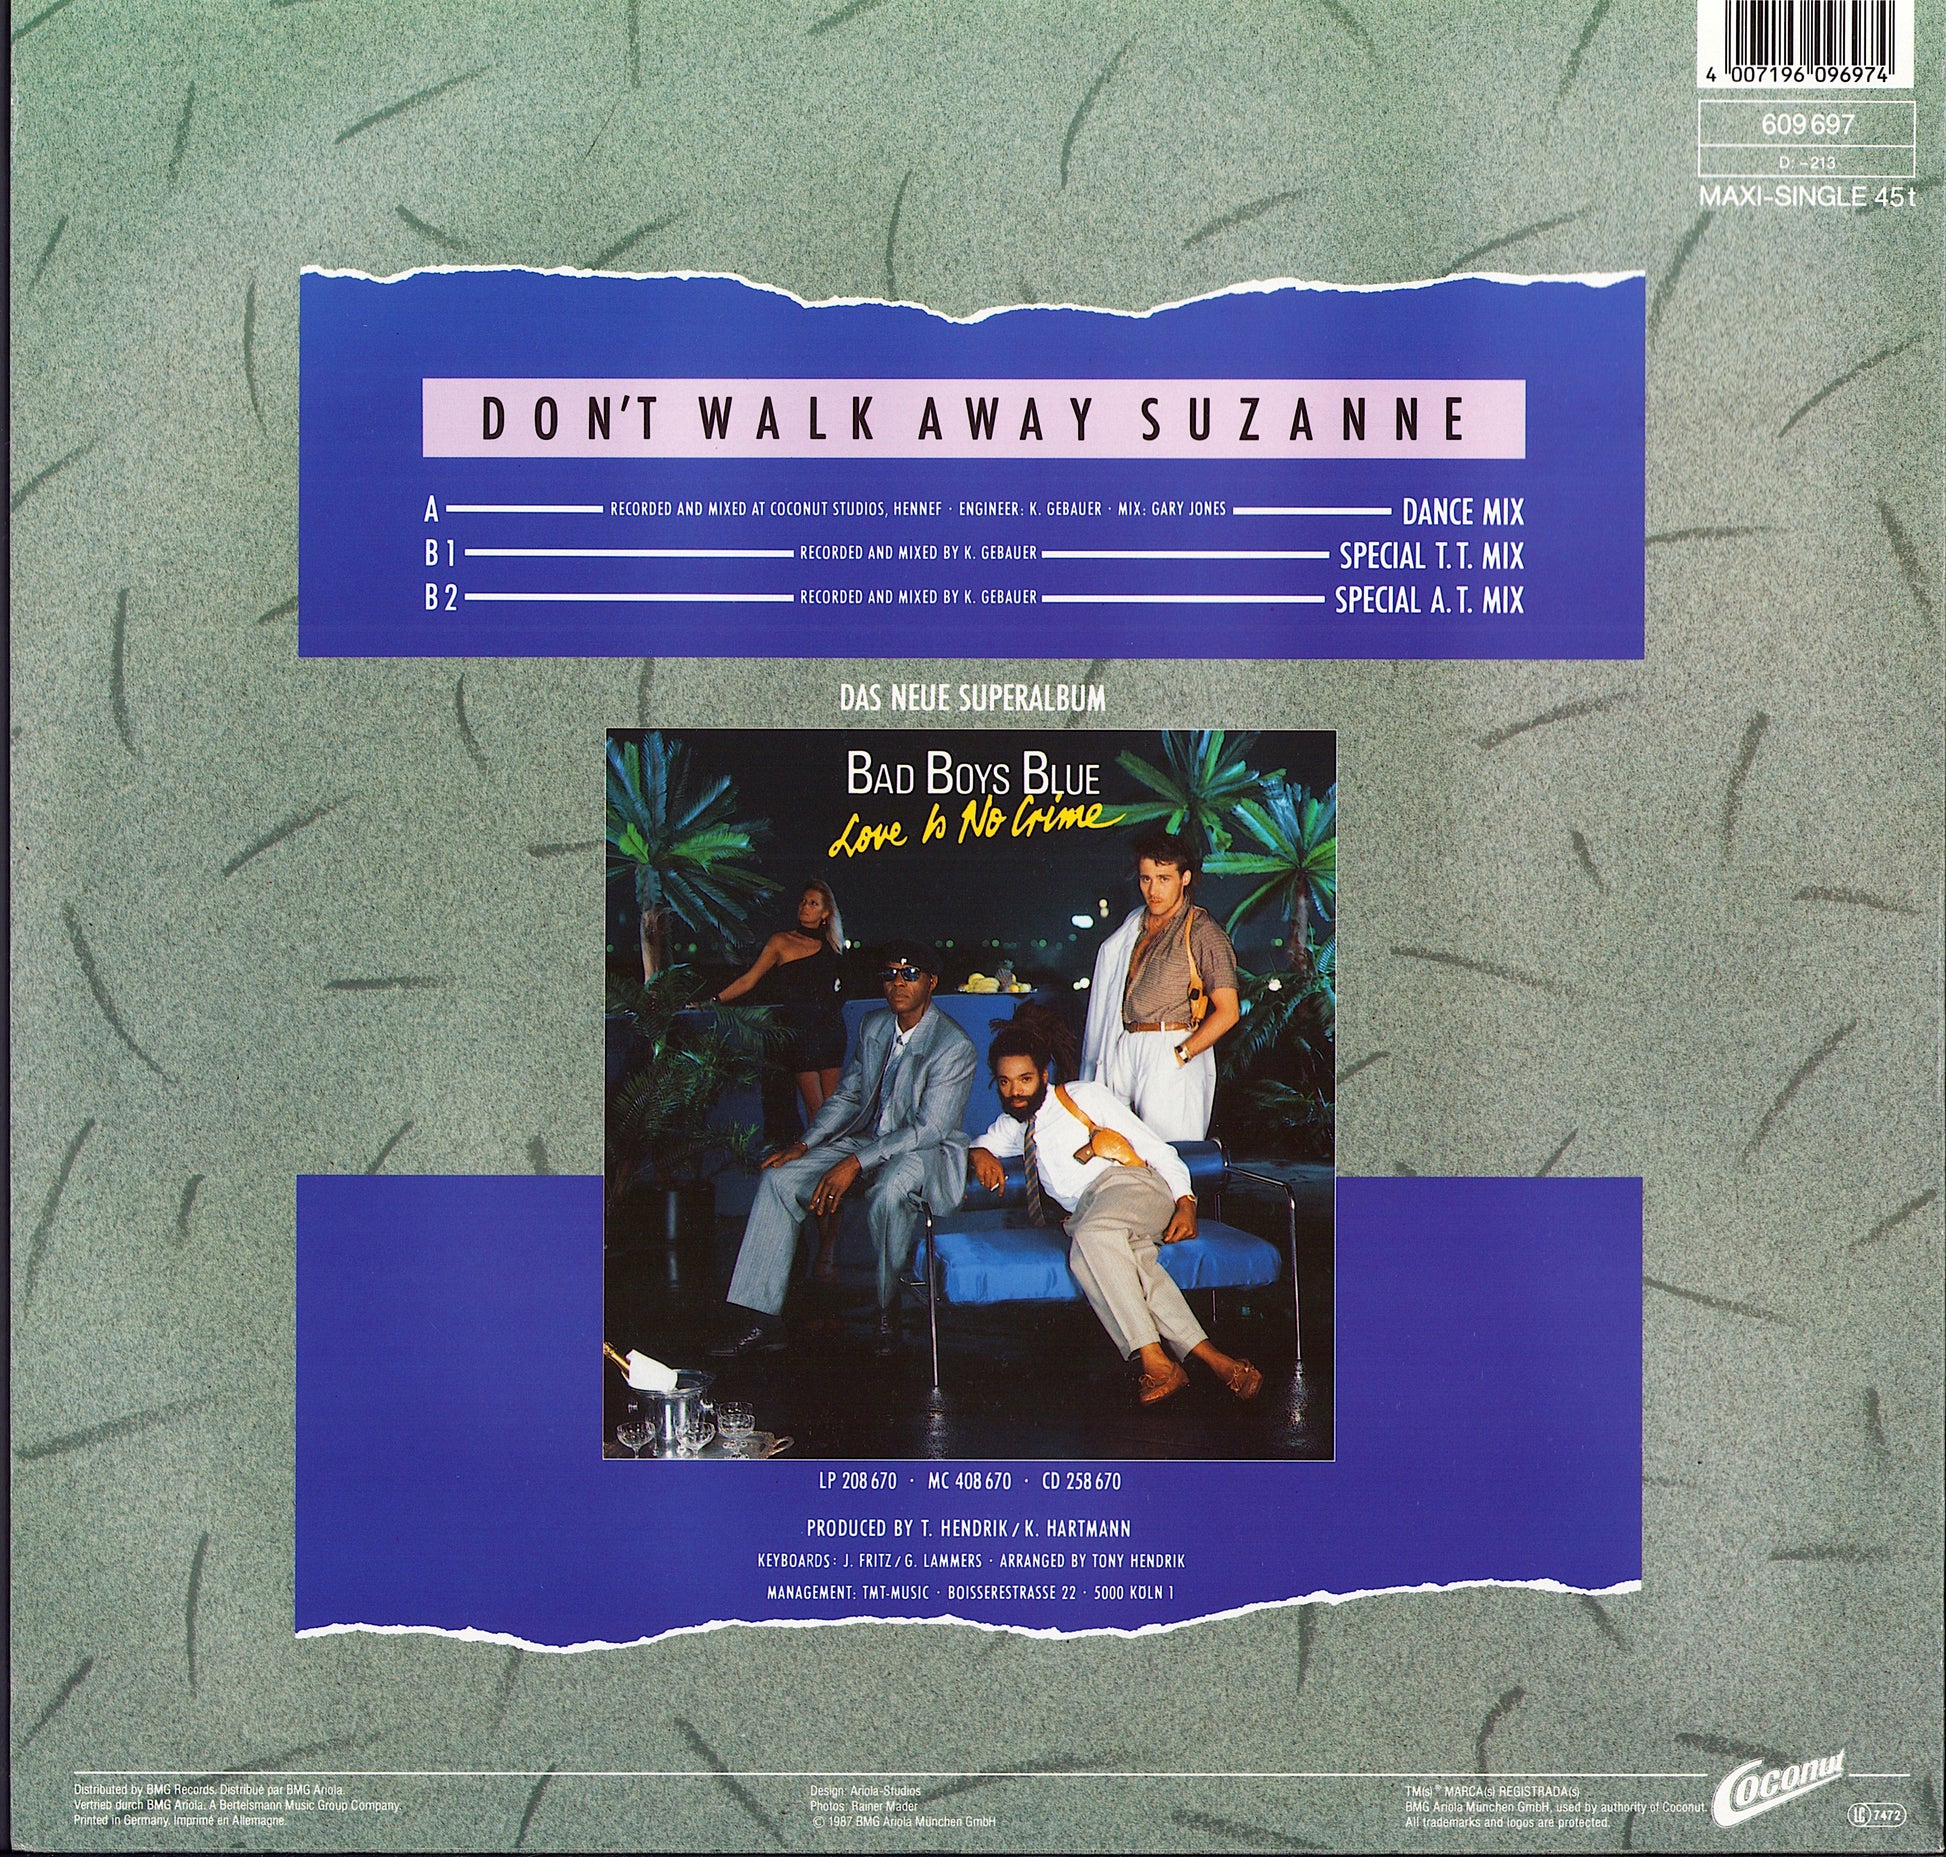 Bad Boys Blue - Don't Walk Away Suzanne Vinyl 12"